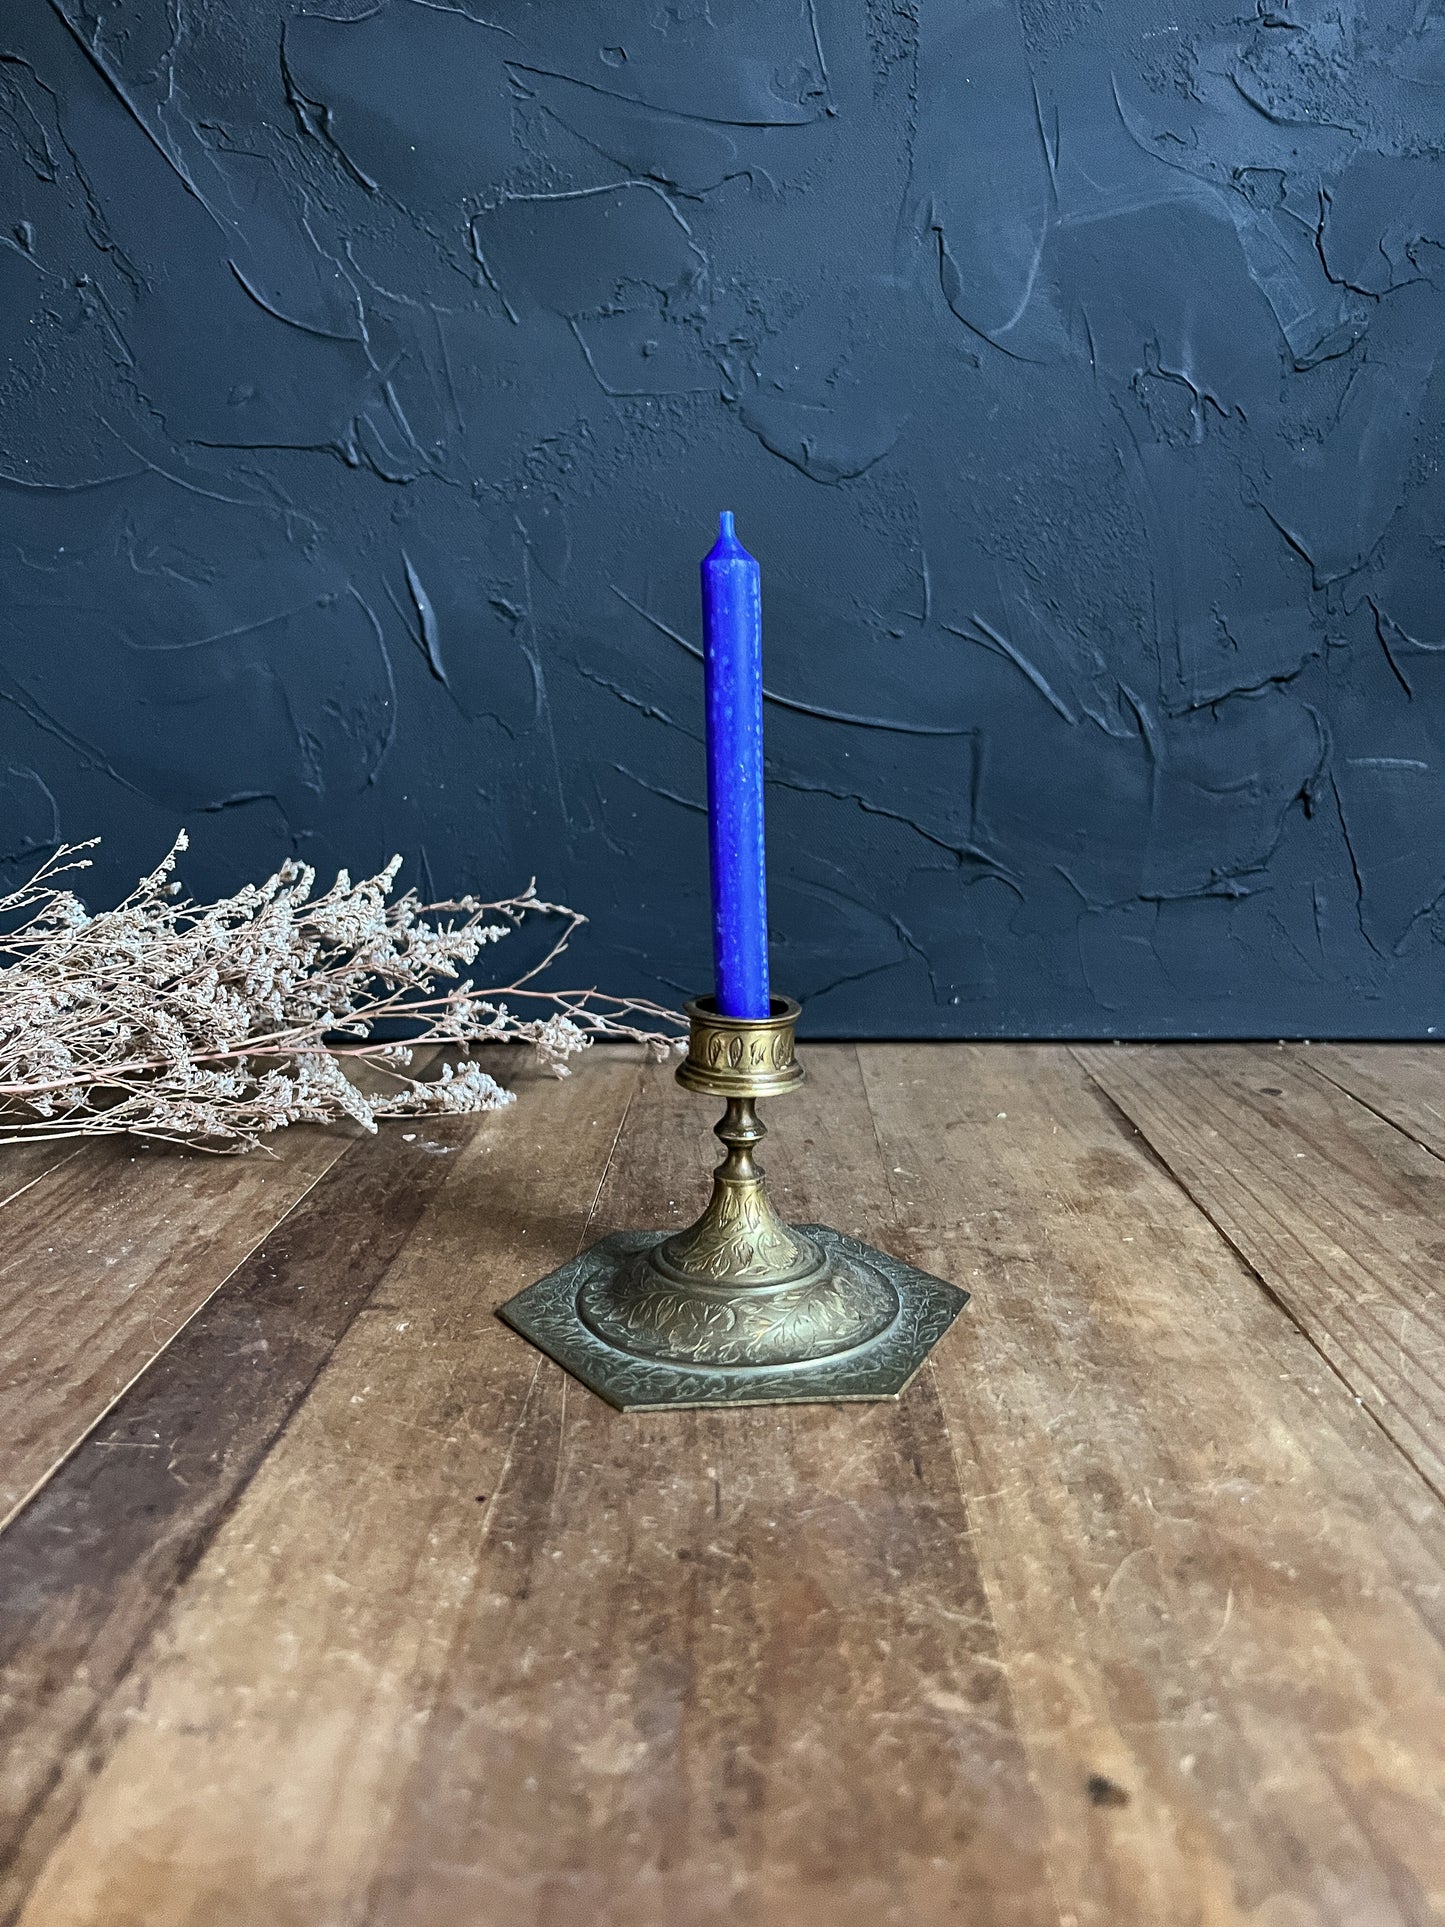 Myrrh Blue Spell Candles - 5" Chime Candles